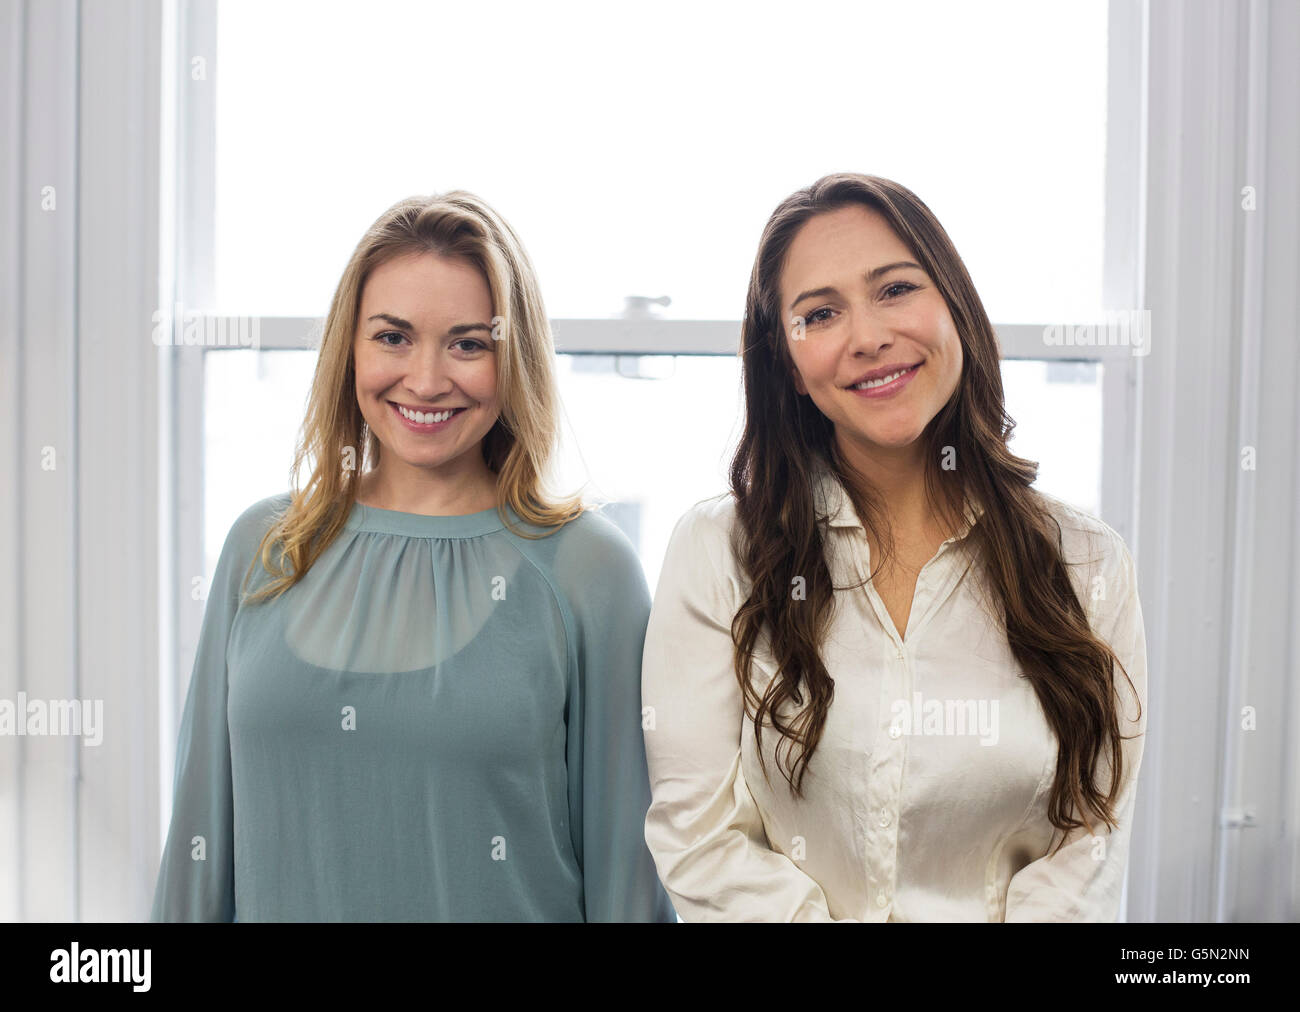 Caucasian businesswomen smiling near window Stock Photo